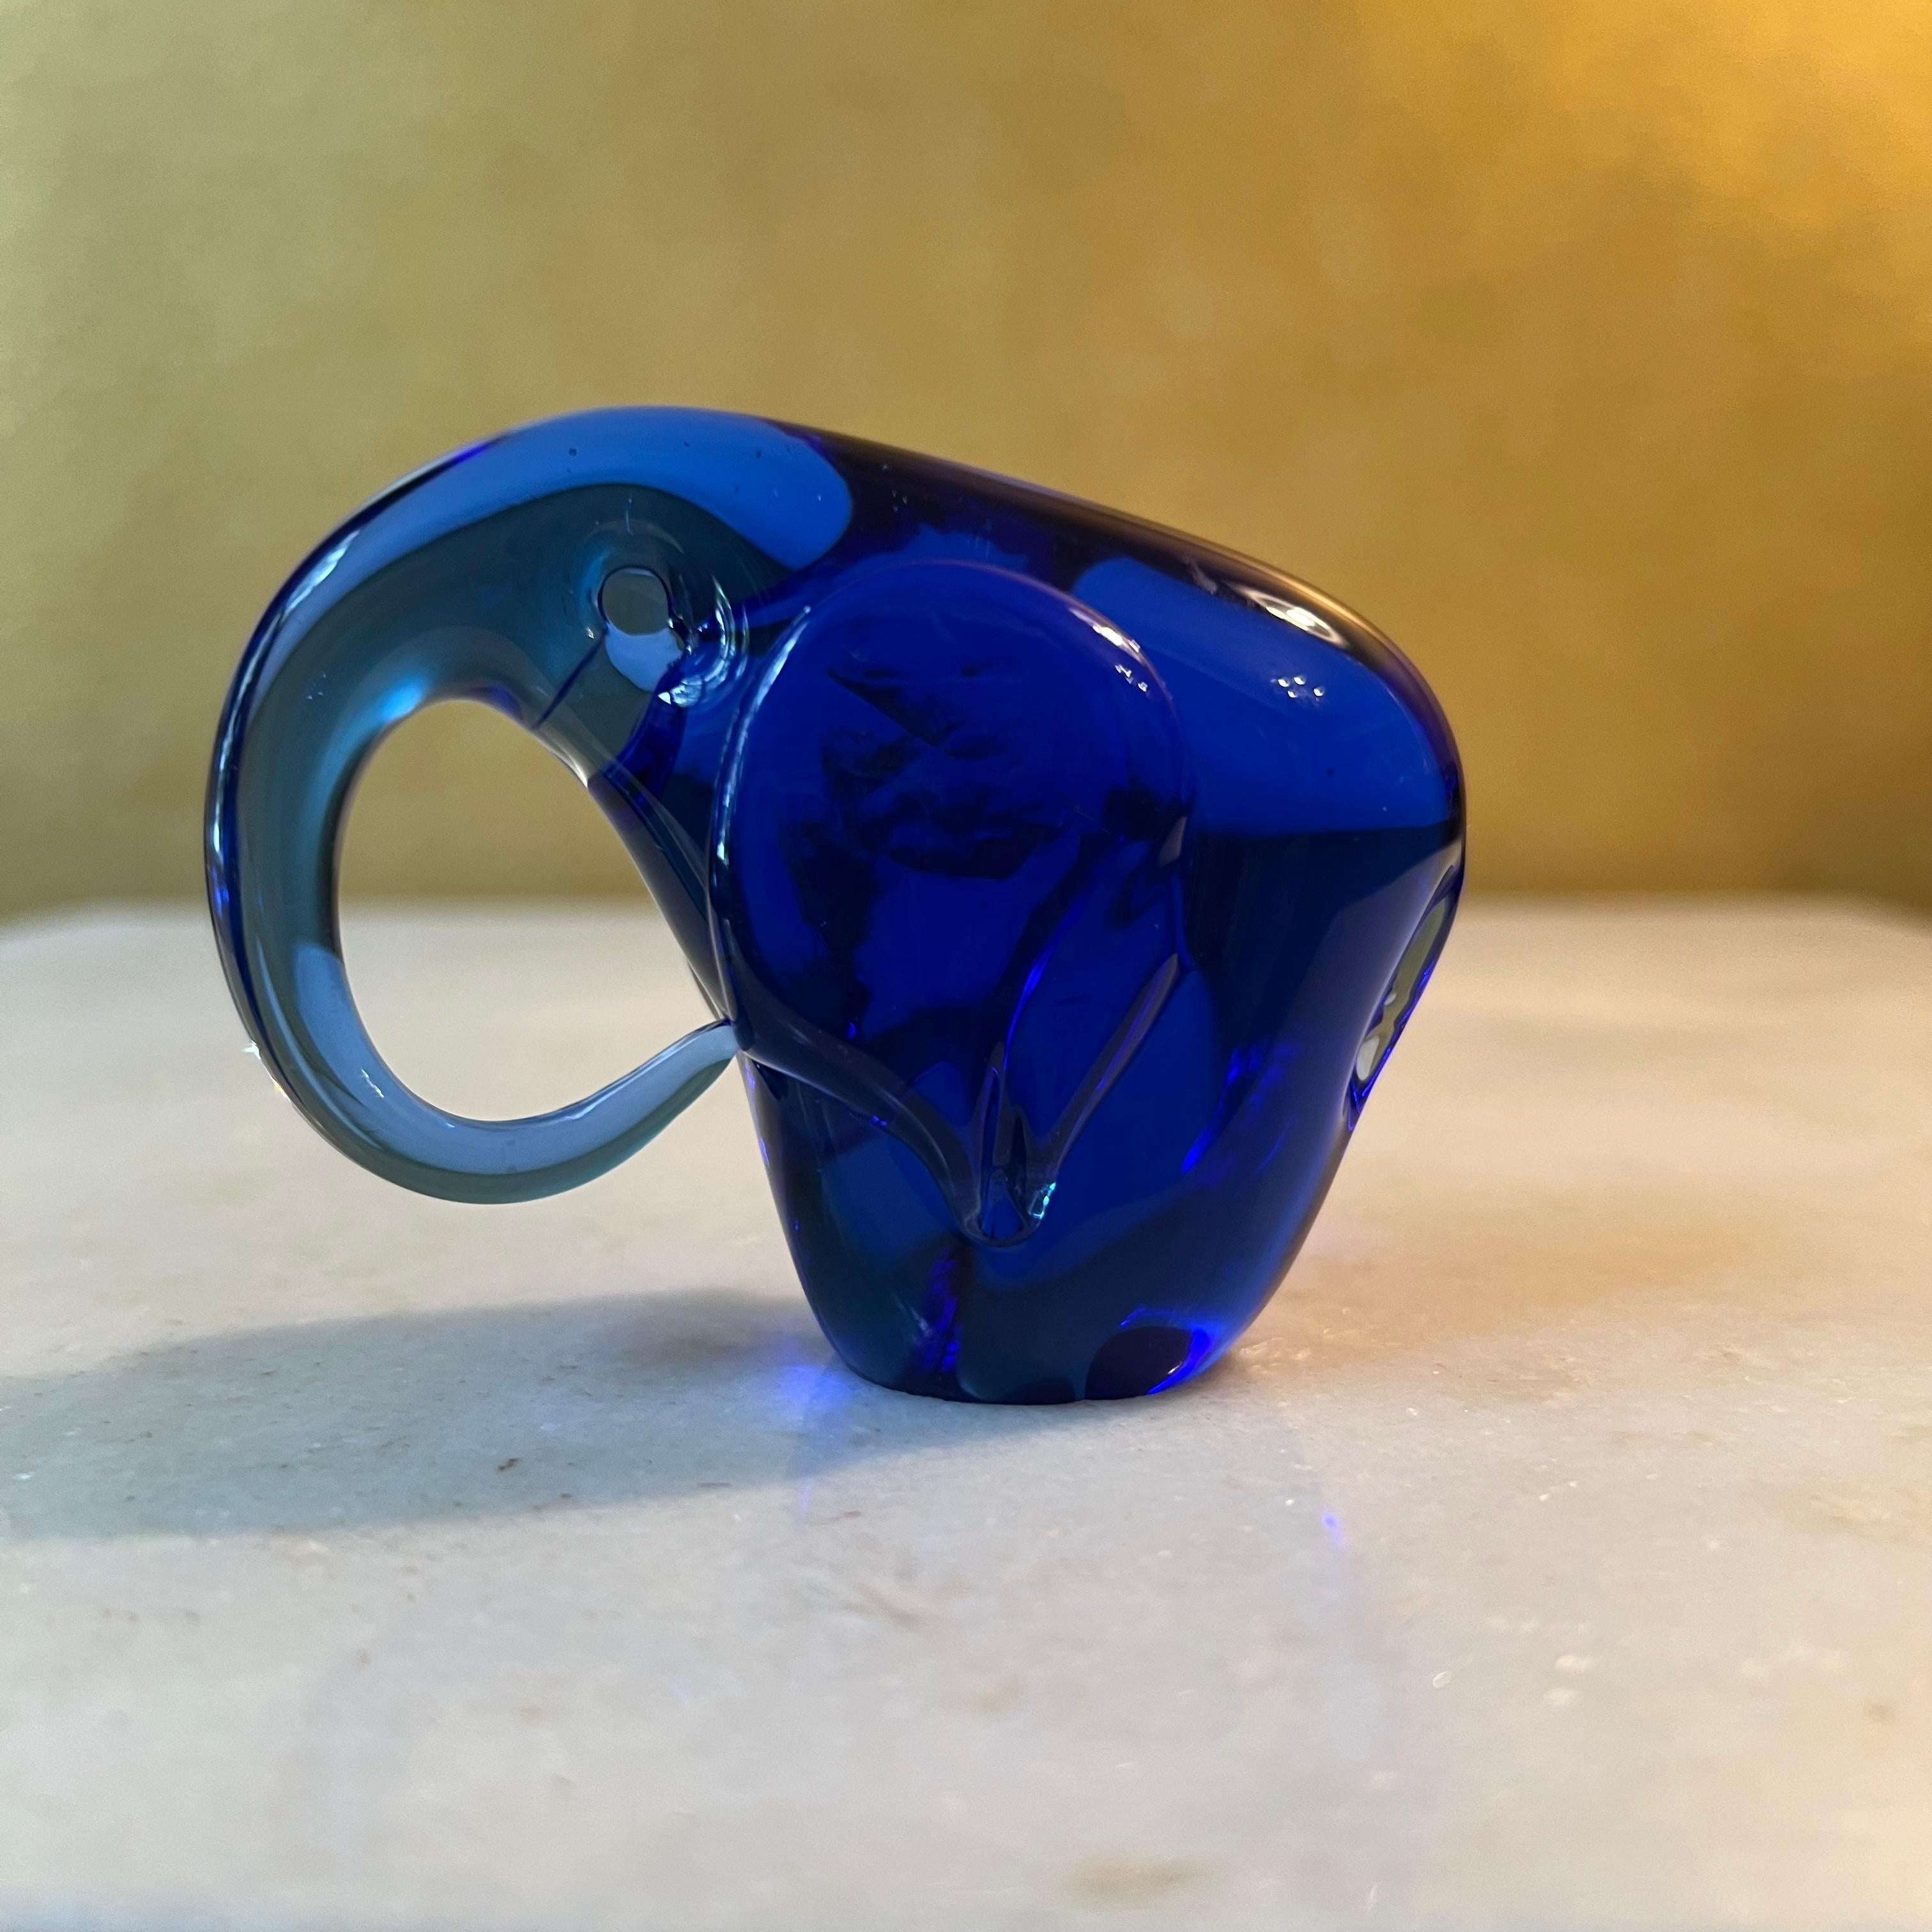 Cobalt blue elephant figurine, some slight marks. 

Material: Glass

Measurements: 5.5cm high, 8cm length, 3.5cm width

Postage via Australia Post with tracking available